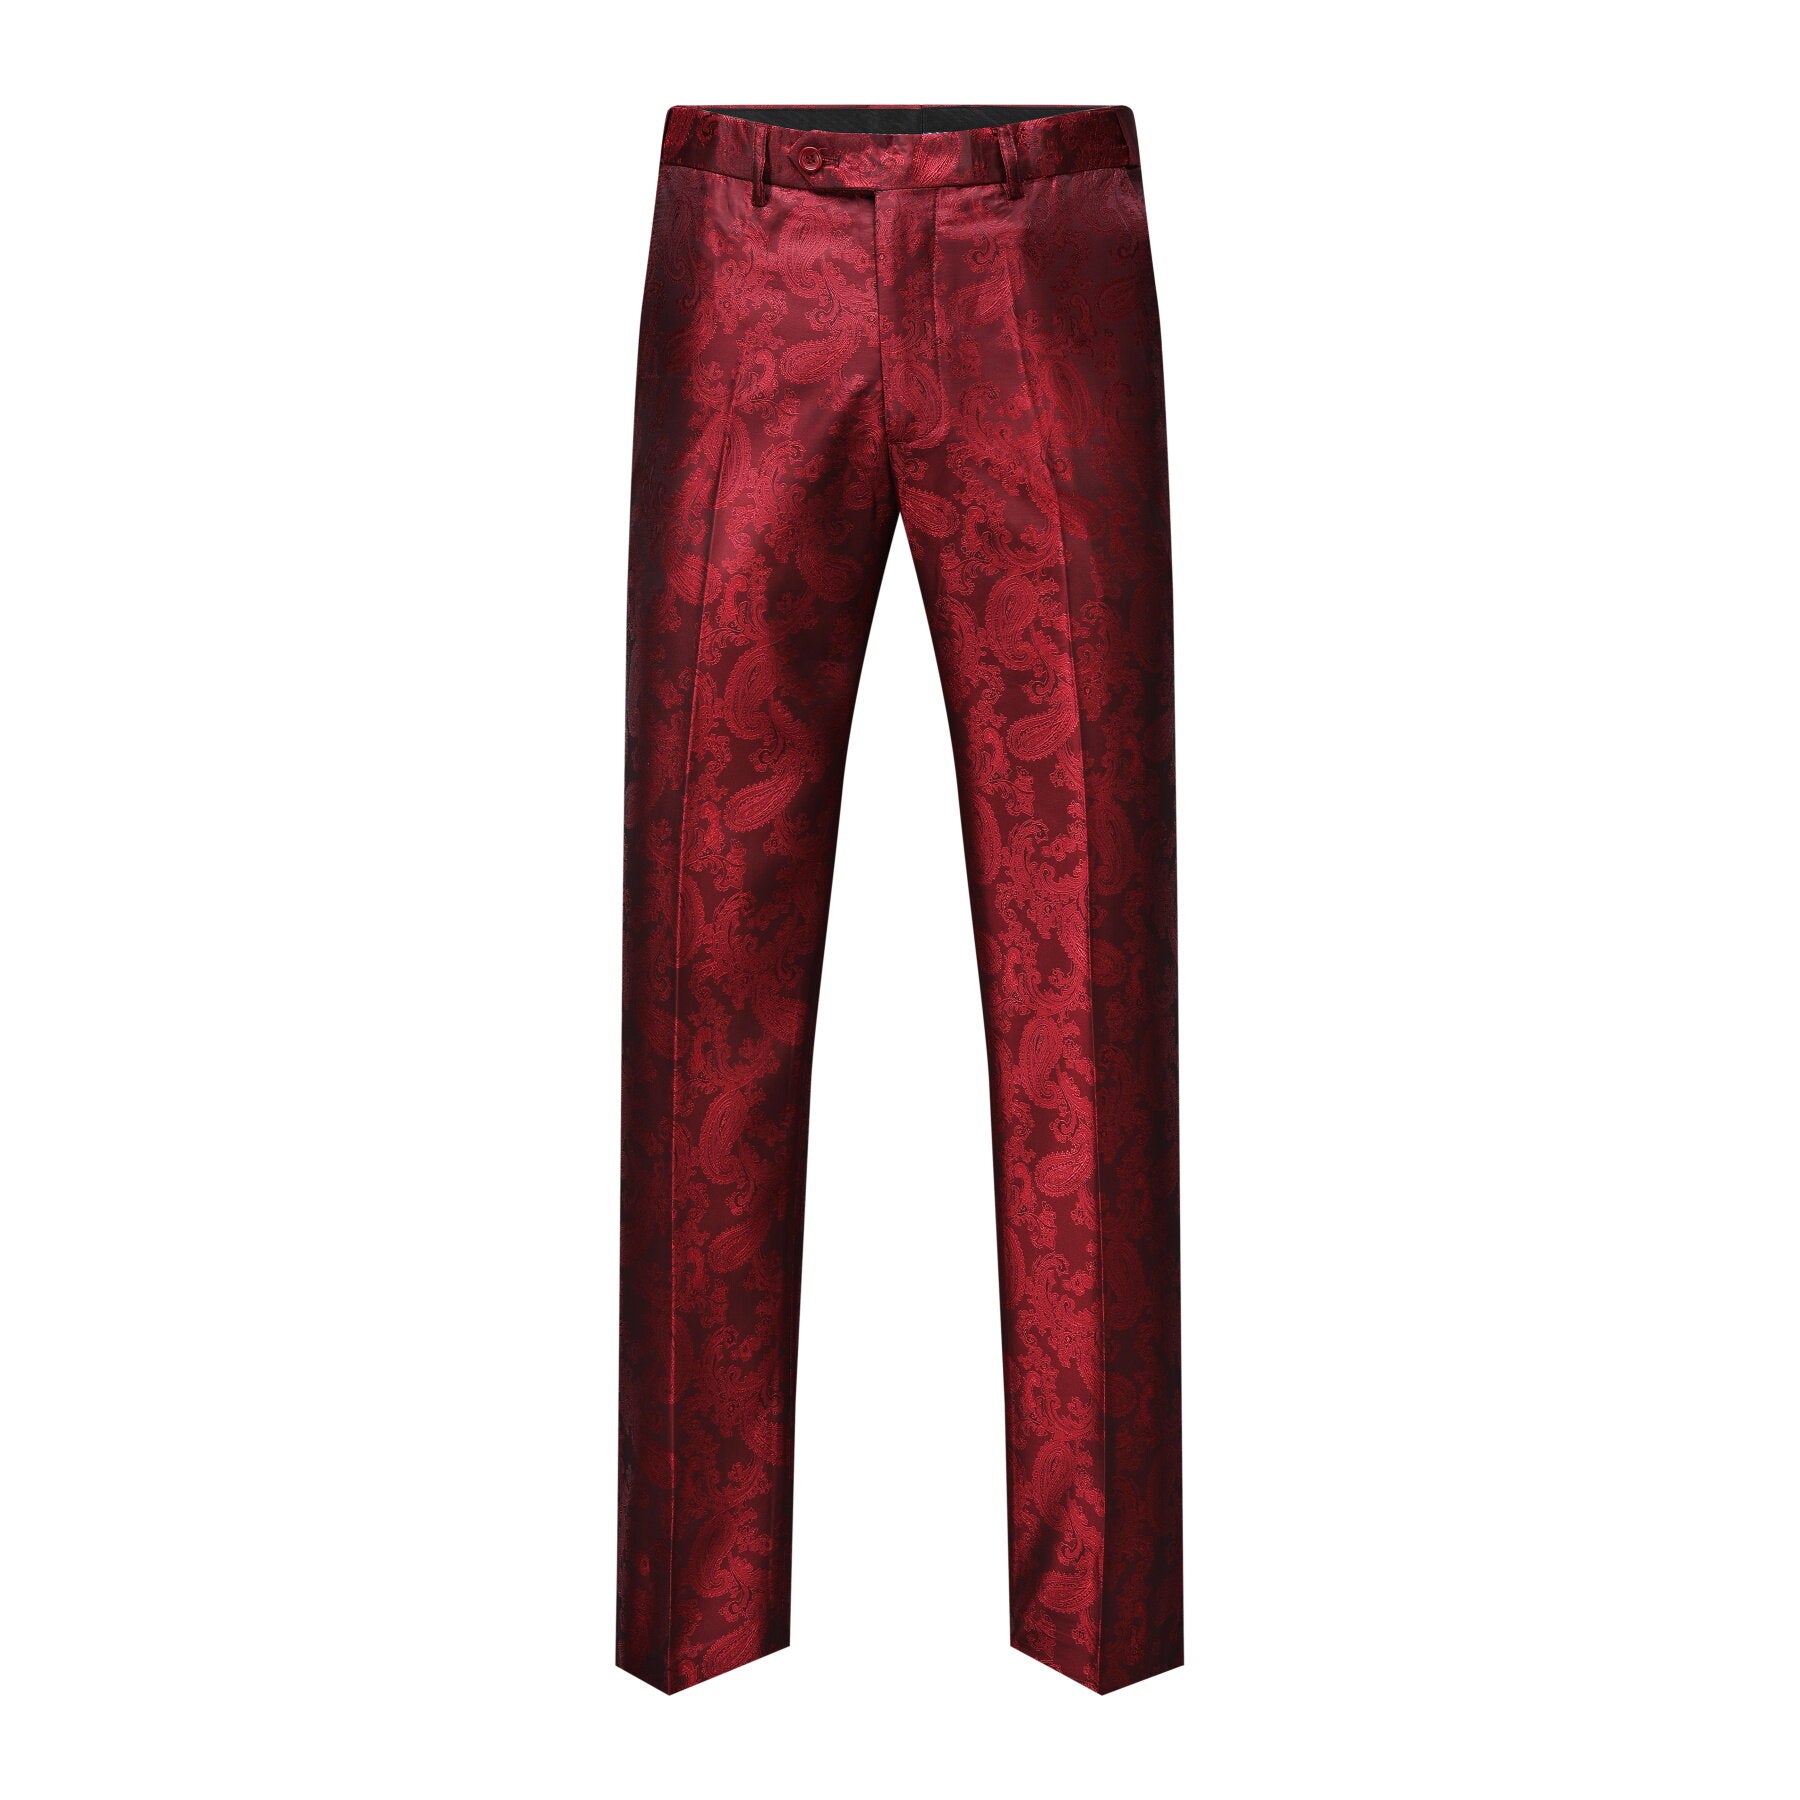 2-Piece Slim Fit Paisley Fashion Suit Red